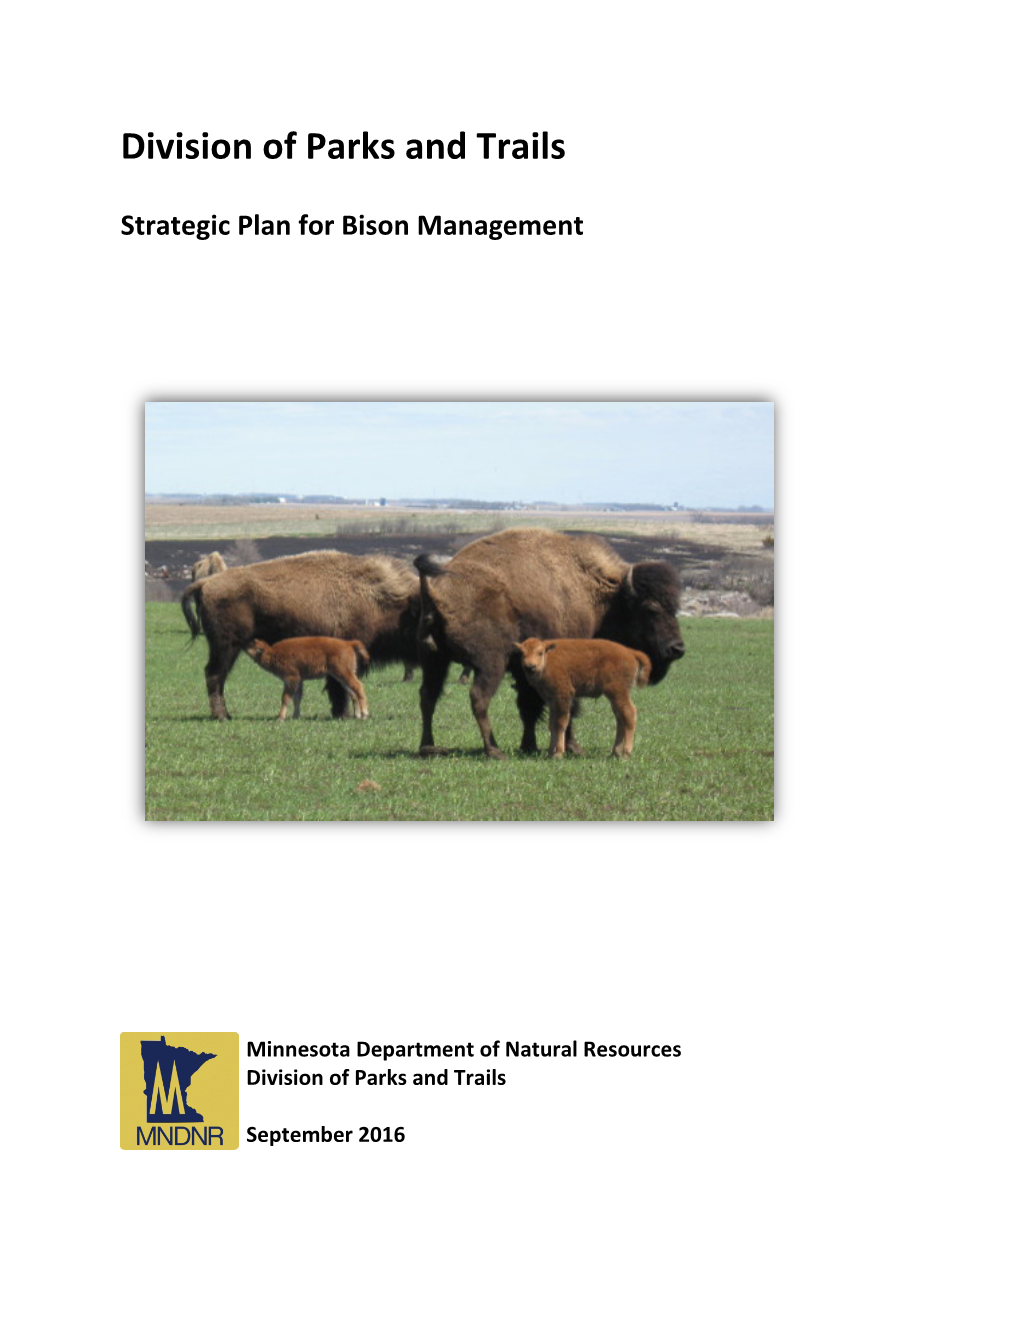 Division of Parks and Trails Strategic Plan for Bison Management